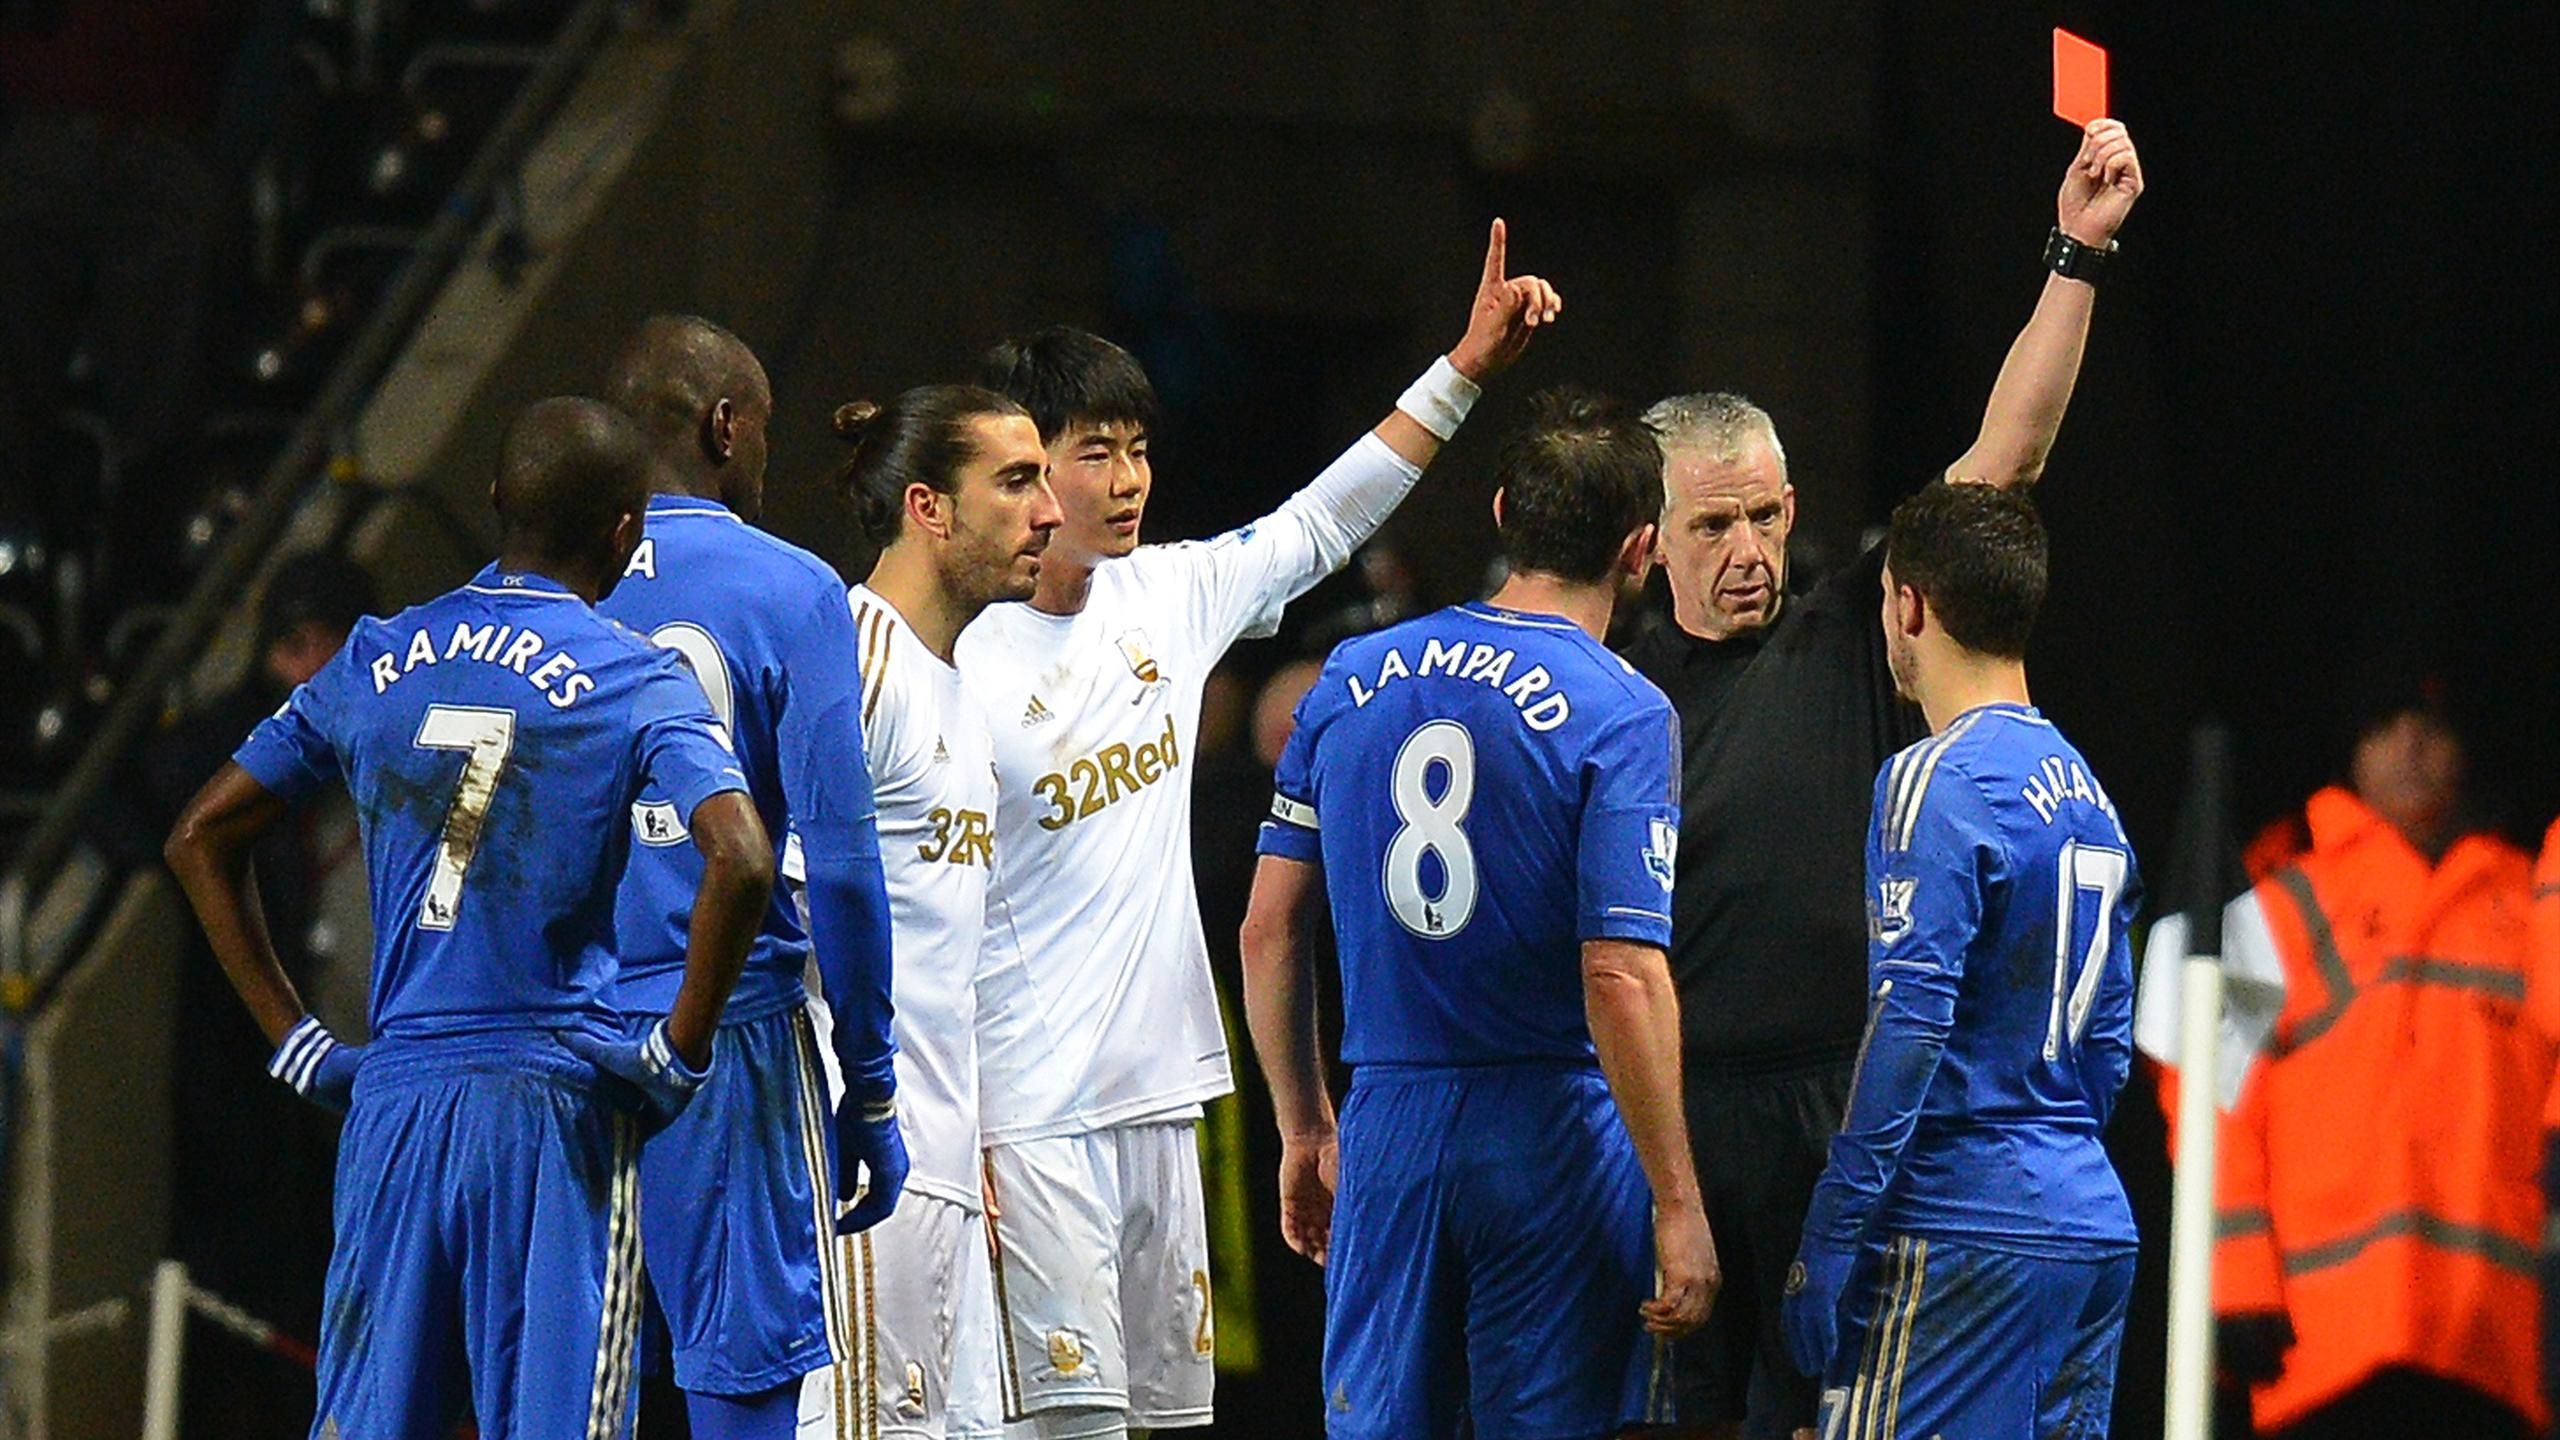 Hazard sent off for kicking ball boy as Swansea reach Wembley - Eurosport